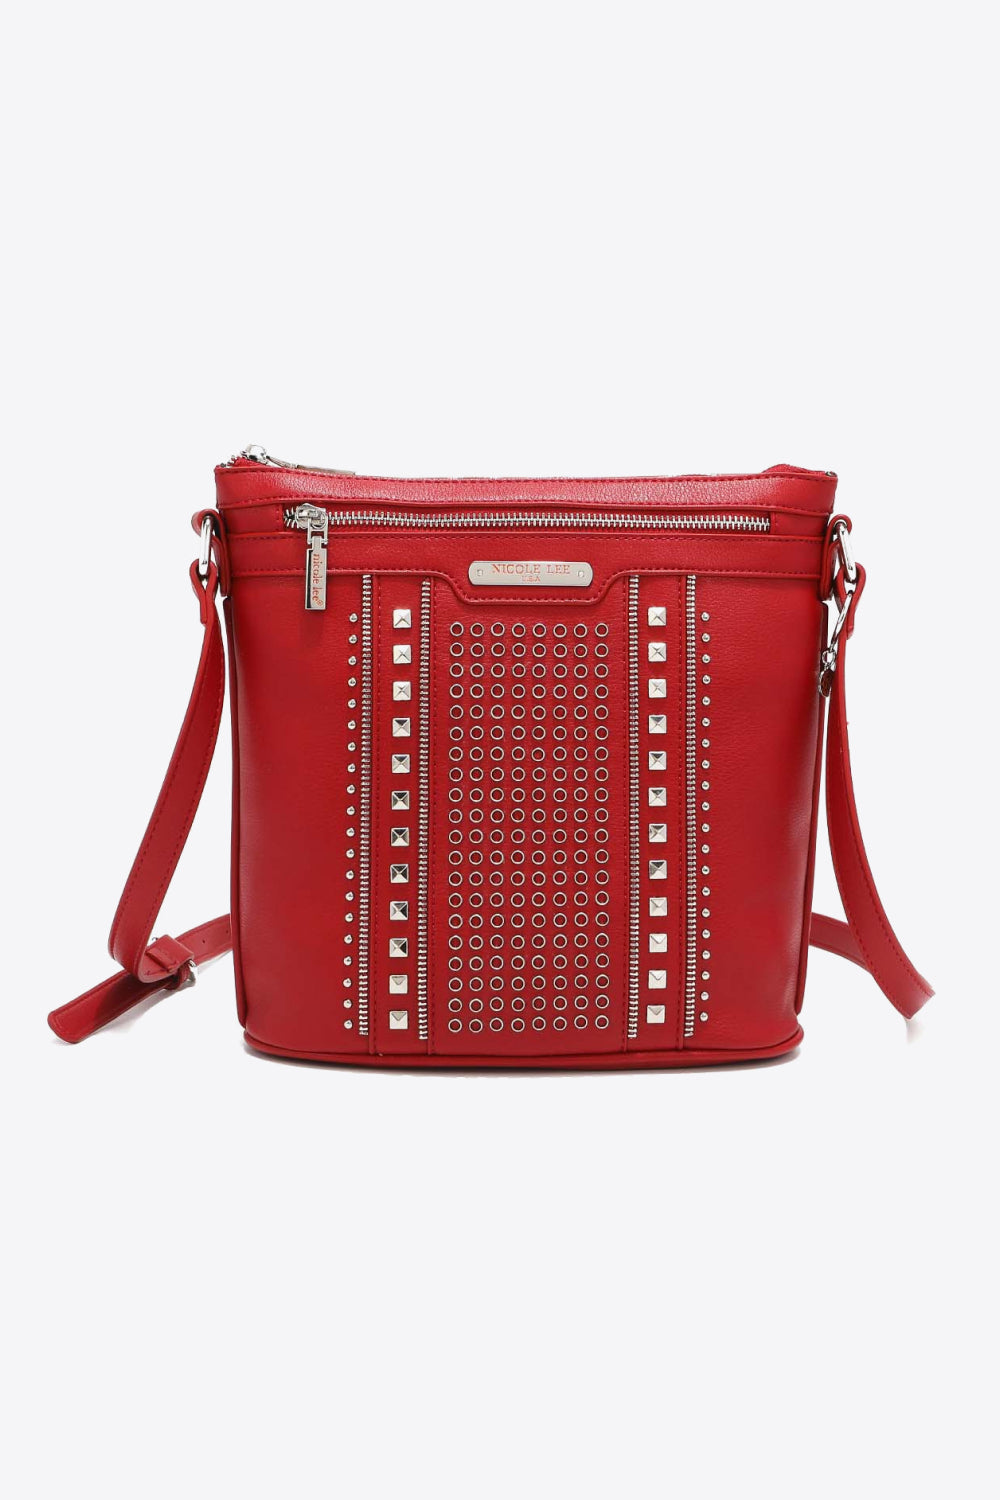 Brown Nicole Lee USA Love Handbag Handbags